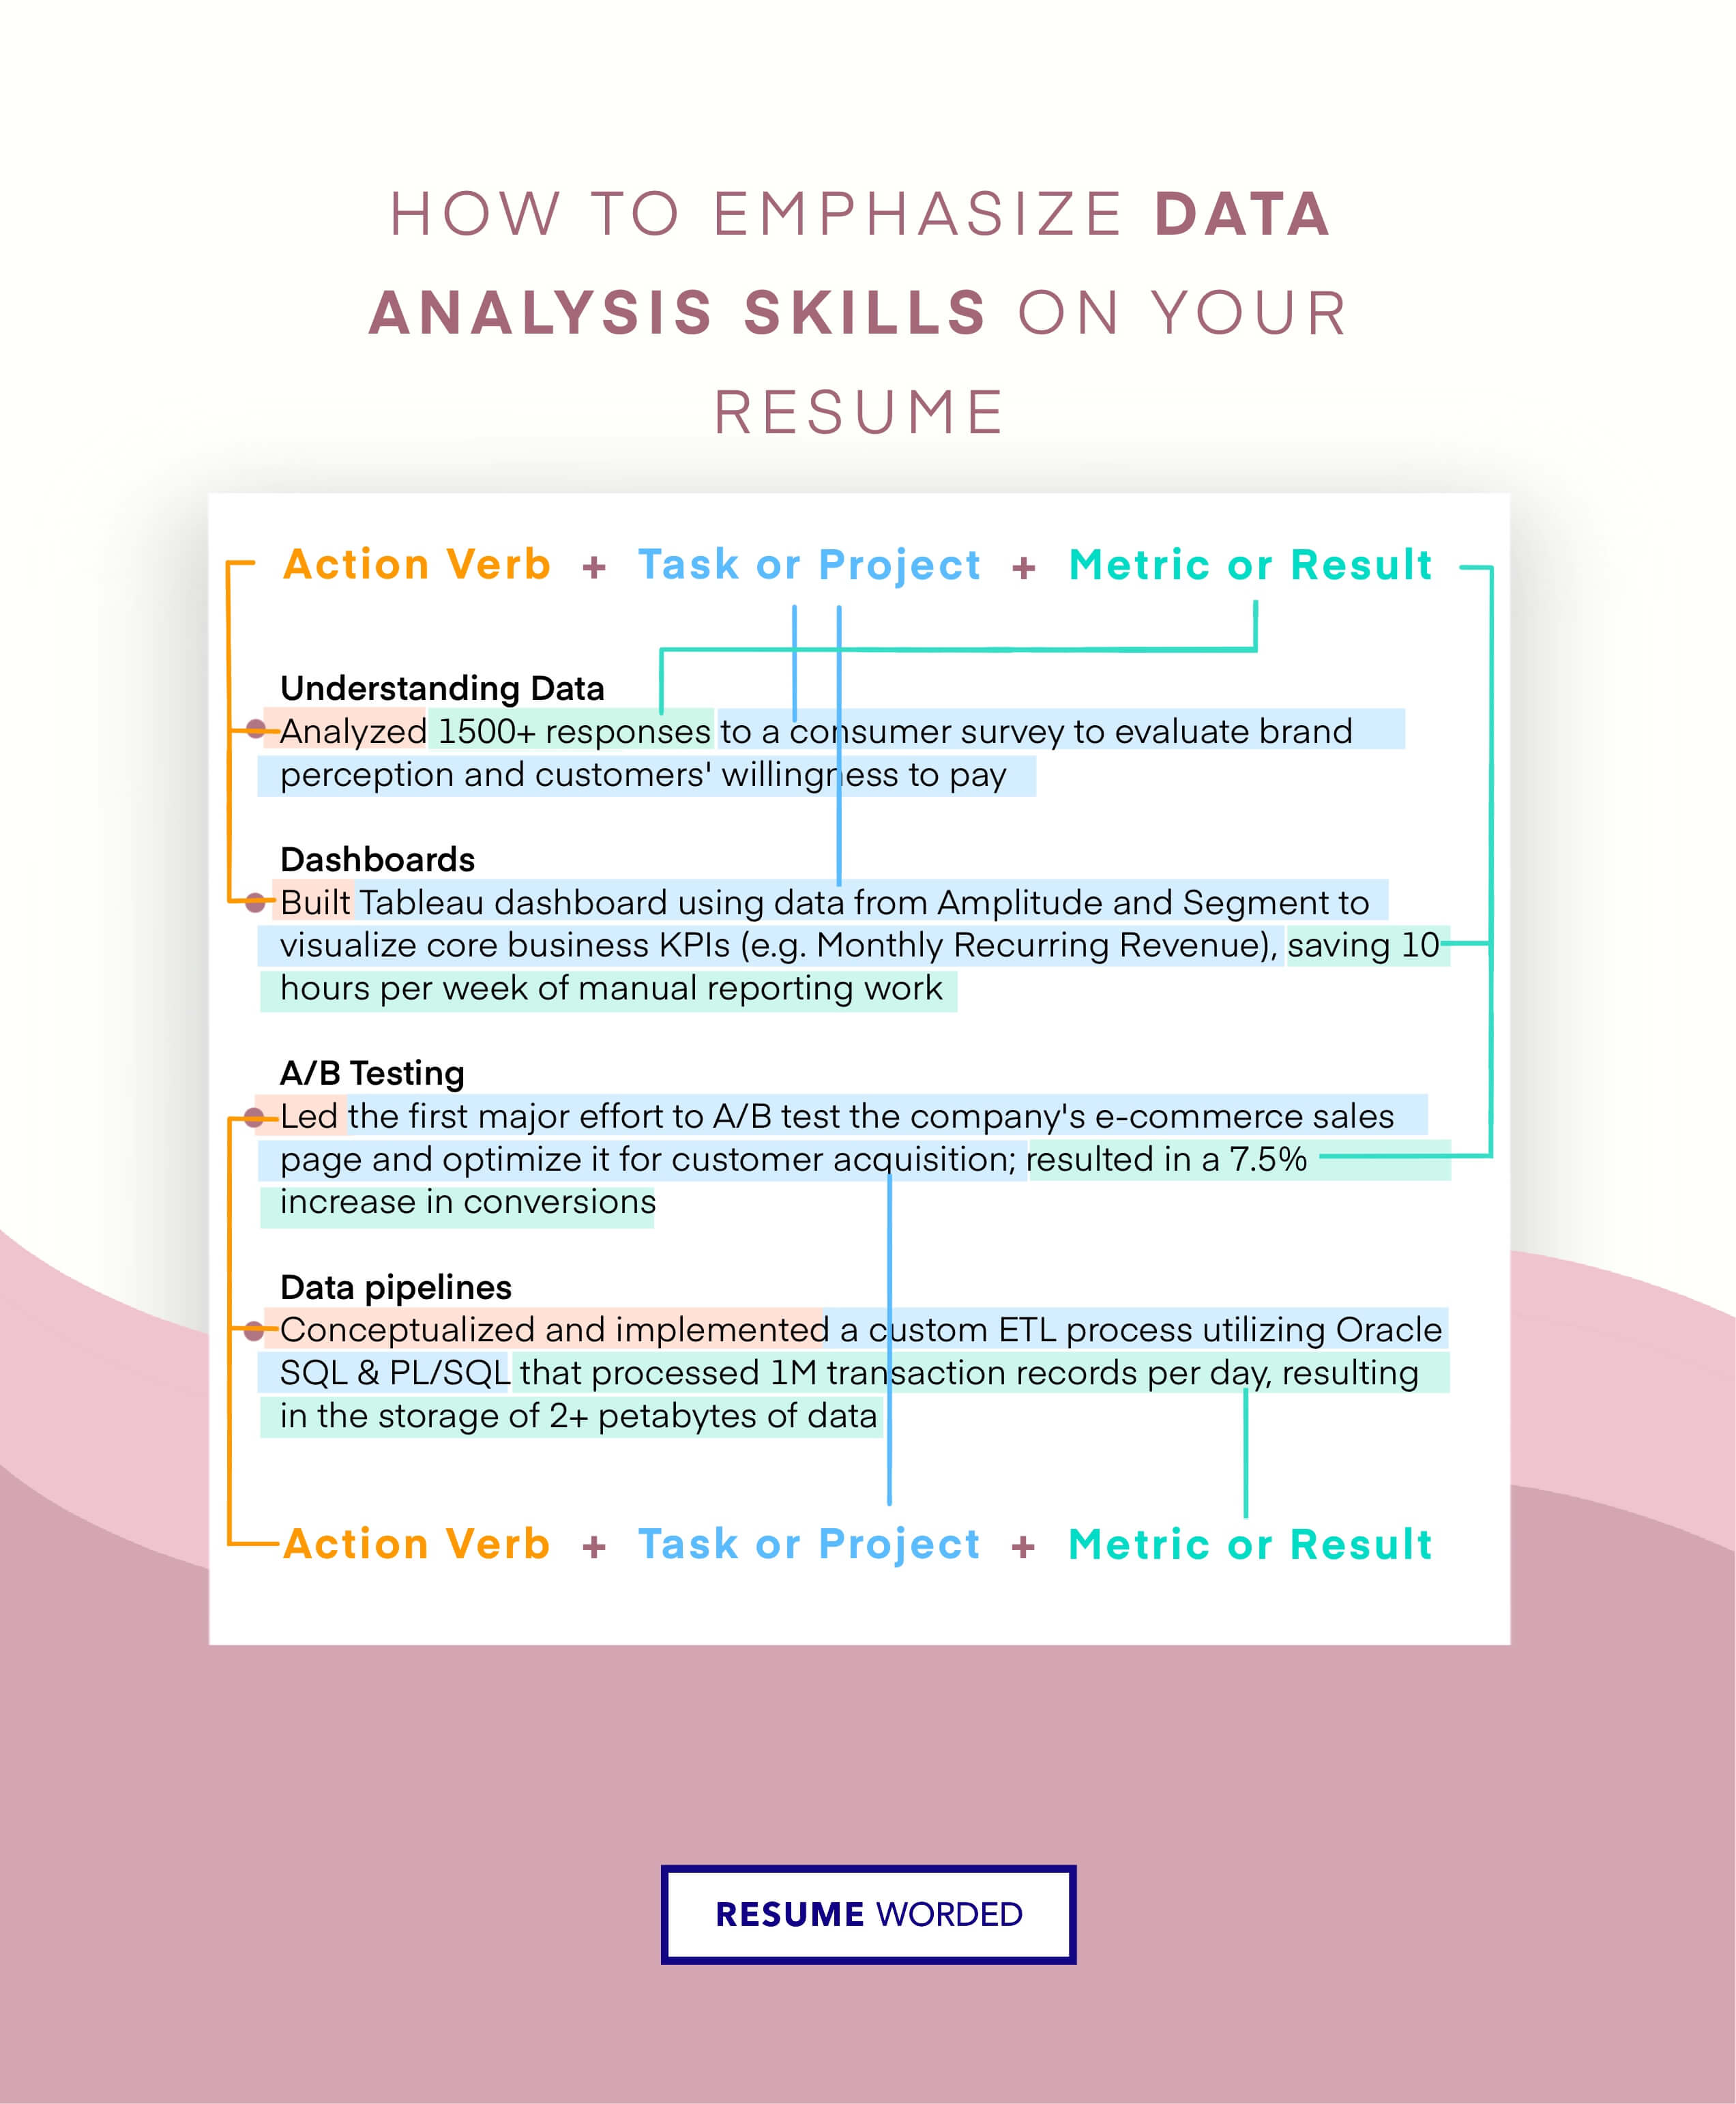 Showcase data analysis and digital skills - Management Consultant Resume